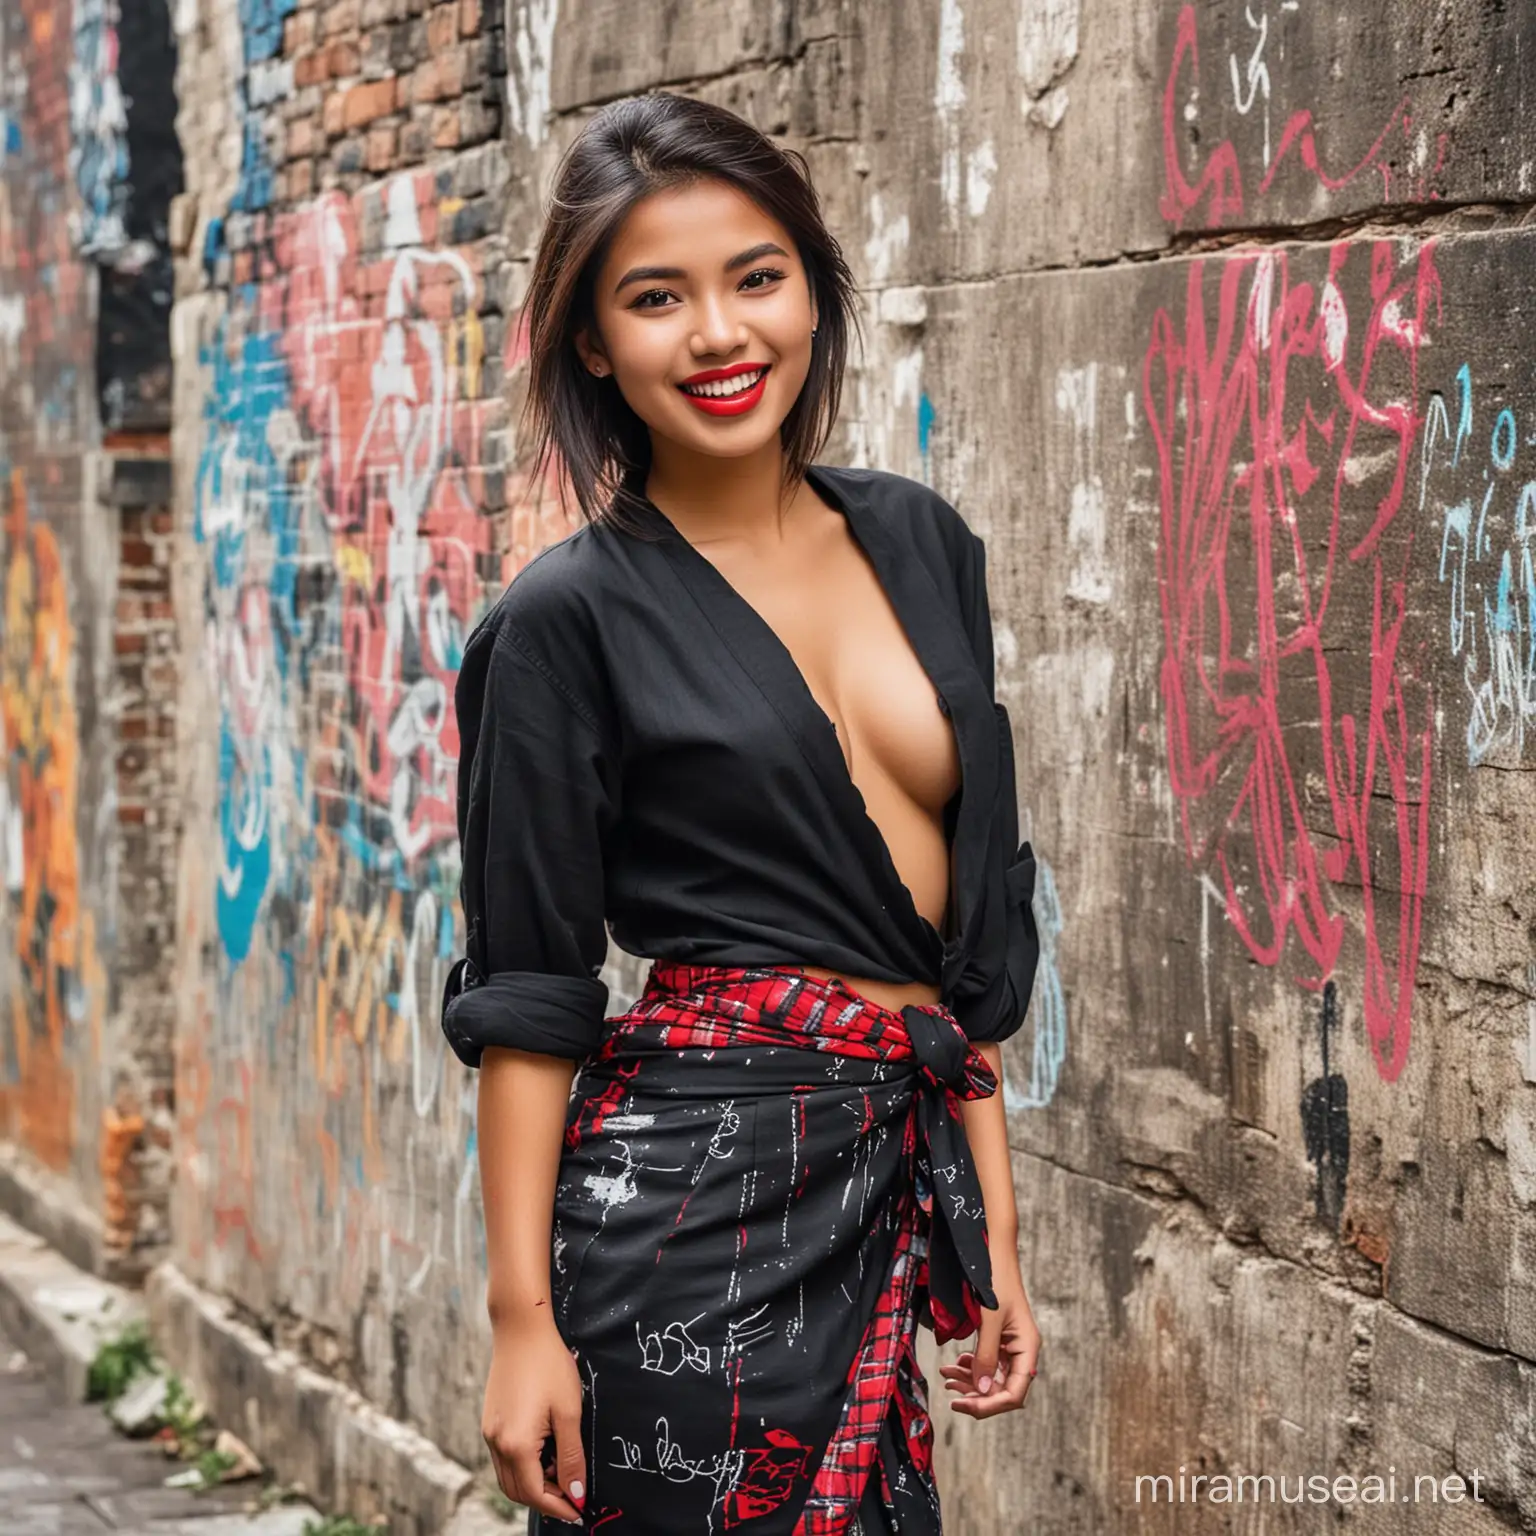 Stylish Indonesian Teen in Black Linen Shirt and Sarong against Graffiti Wall